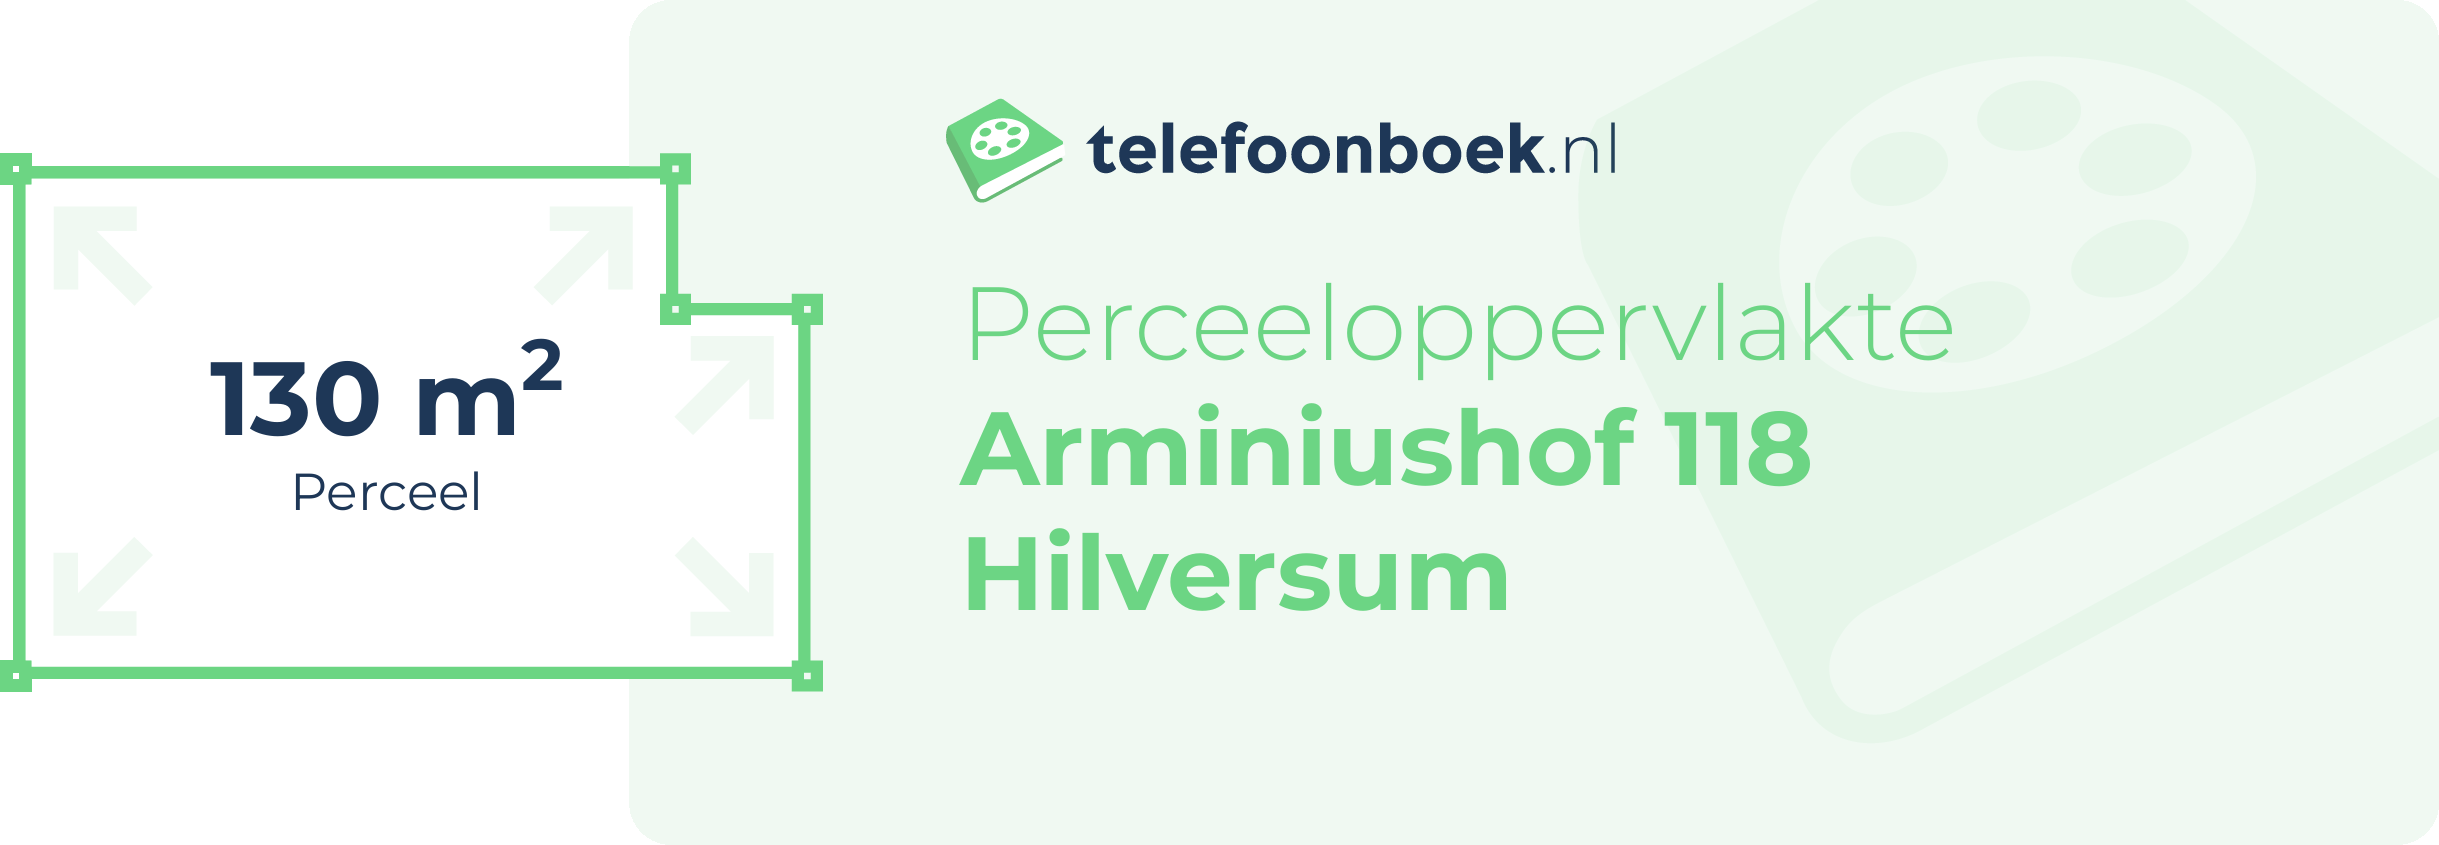 Perceeloppervlakte Arminiushof 118 Hilversum